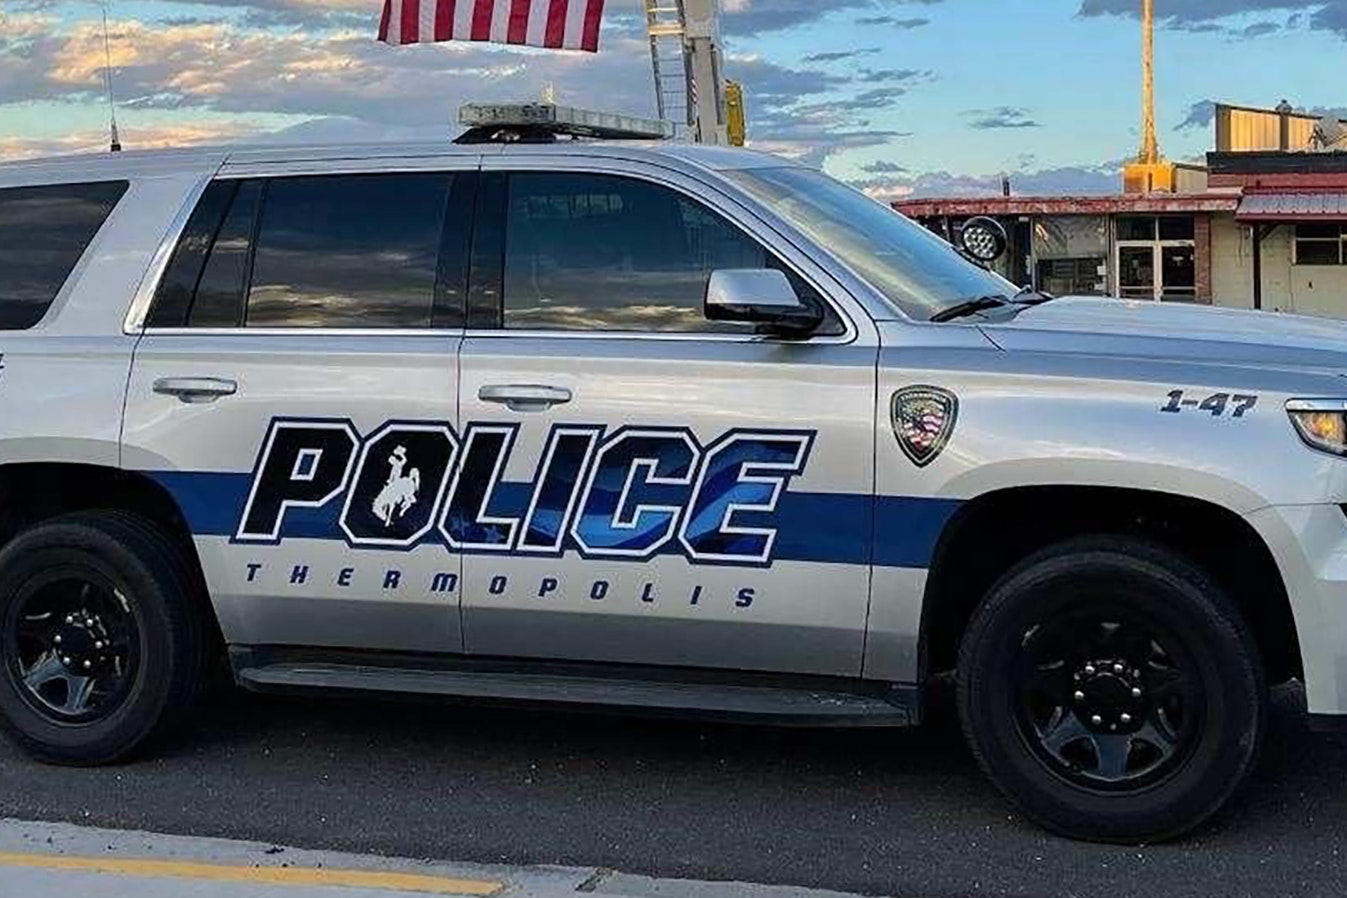 Thermopolis Police car 4 29 23